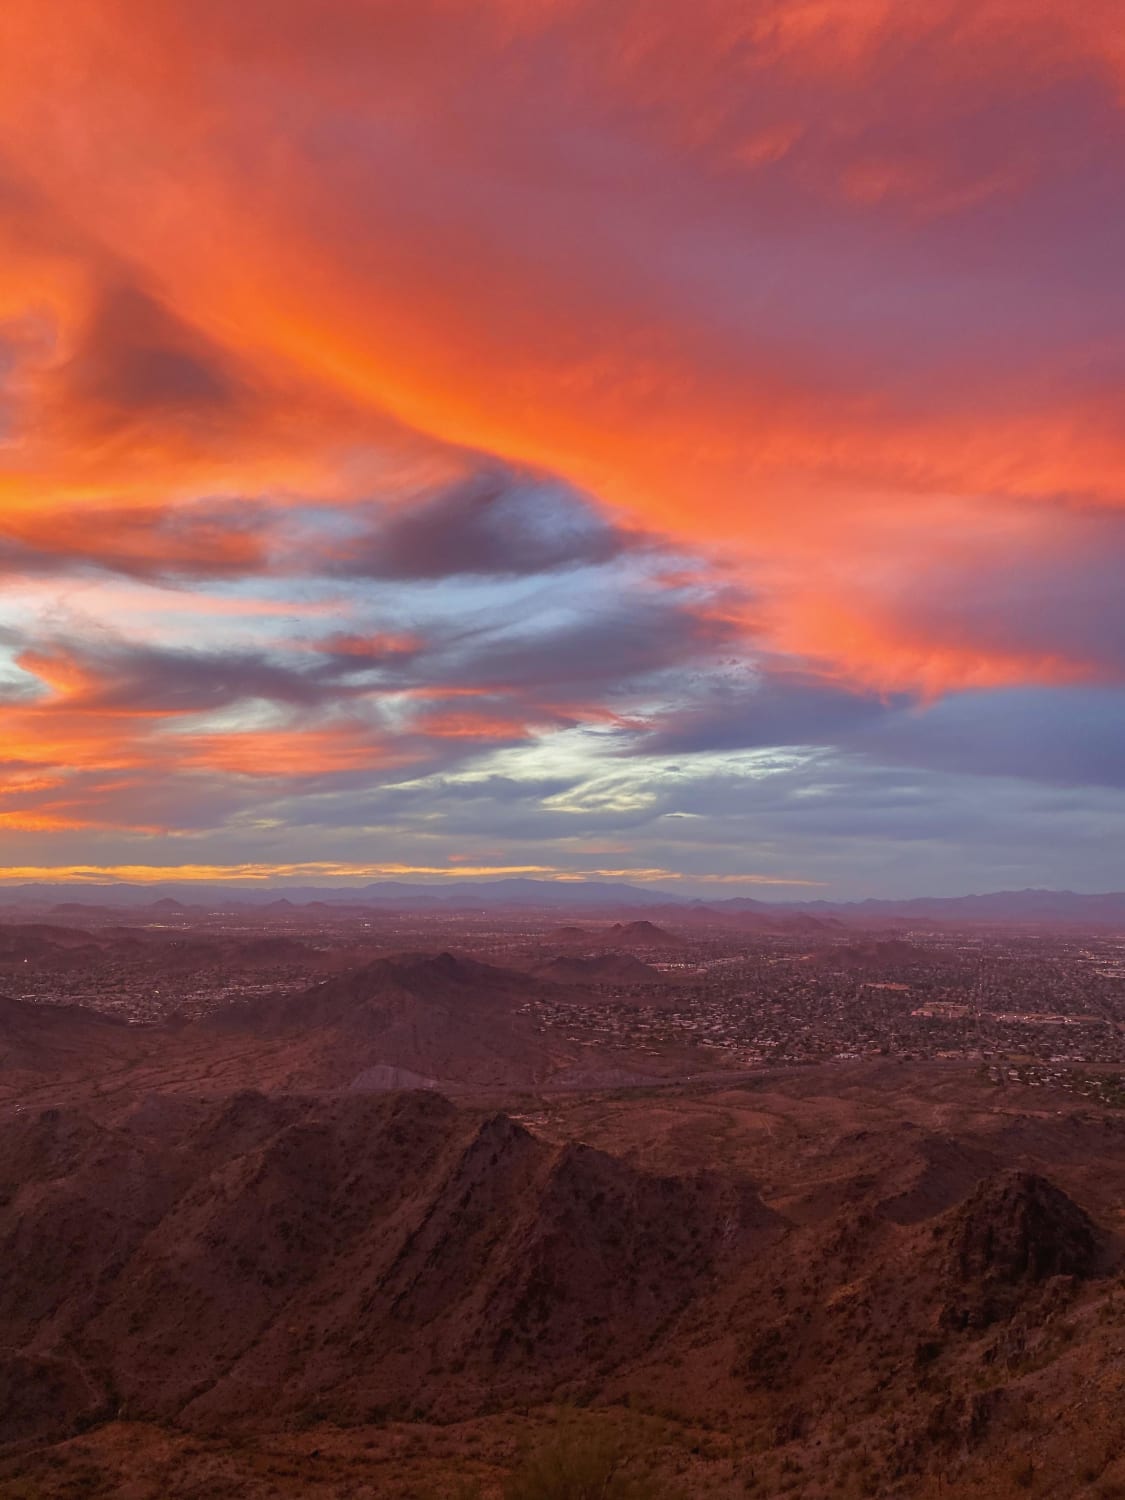 Piestewa Peak near Phoenix. Arizona has the best sunsets